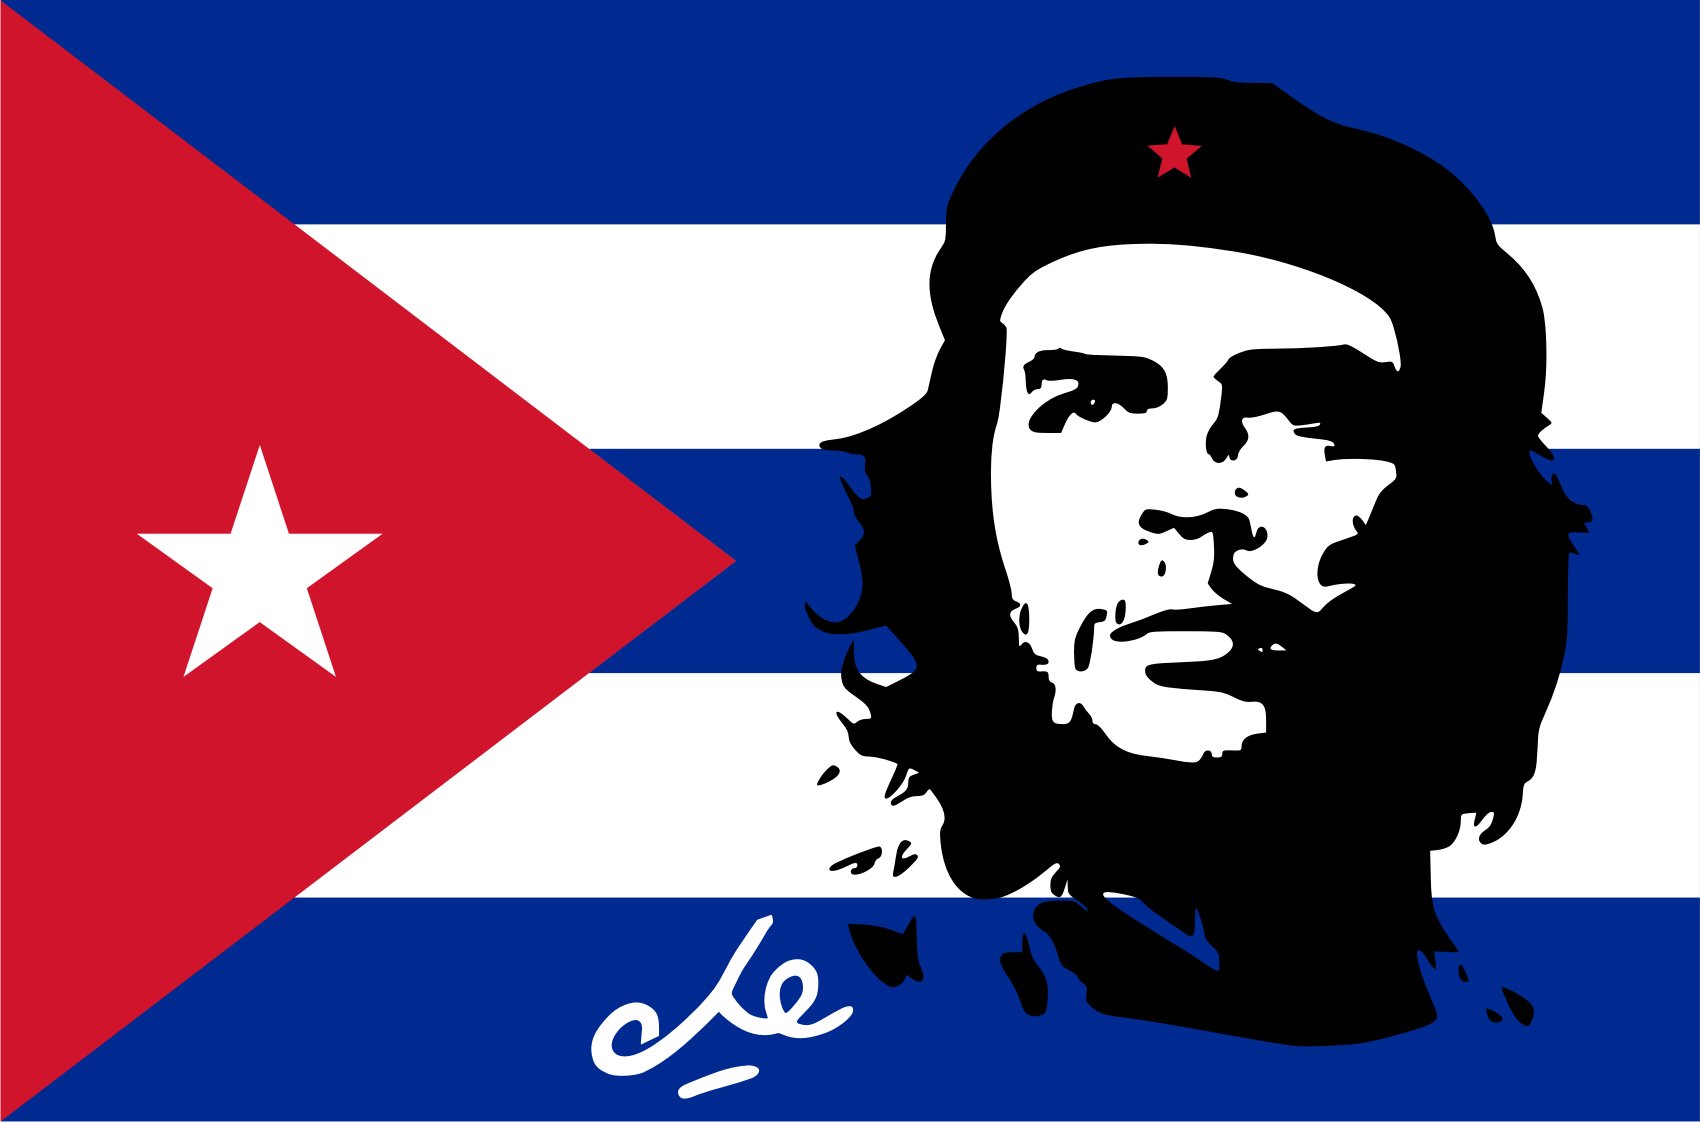 Etaia 8x12 cm - Auto Aufkleber Che Guevara roter Stern Revolution auf Kuba Cuba Fahne/Flagge Sticker Motorrad Handy von Etaia